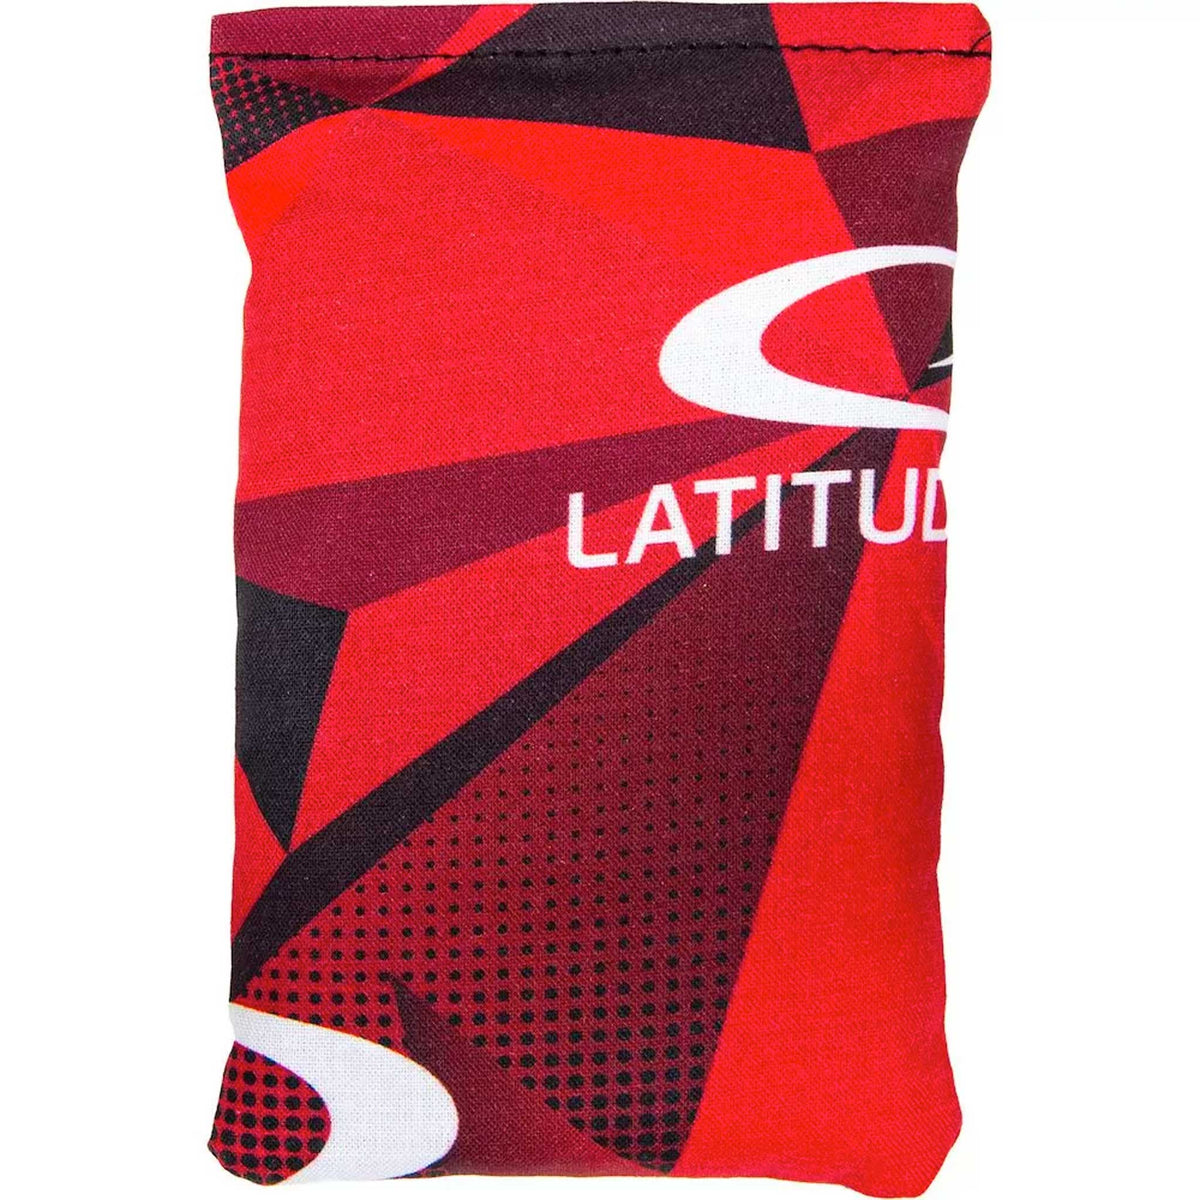 Latitude 64 Prism Chalk Bag